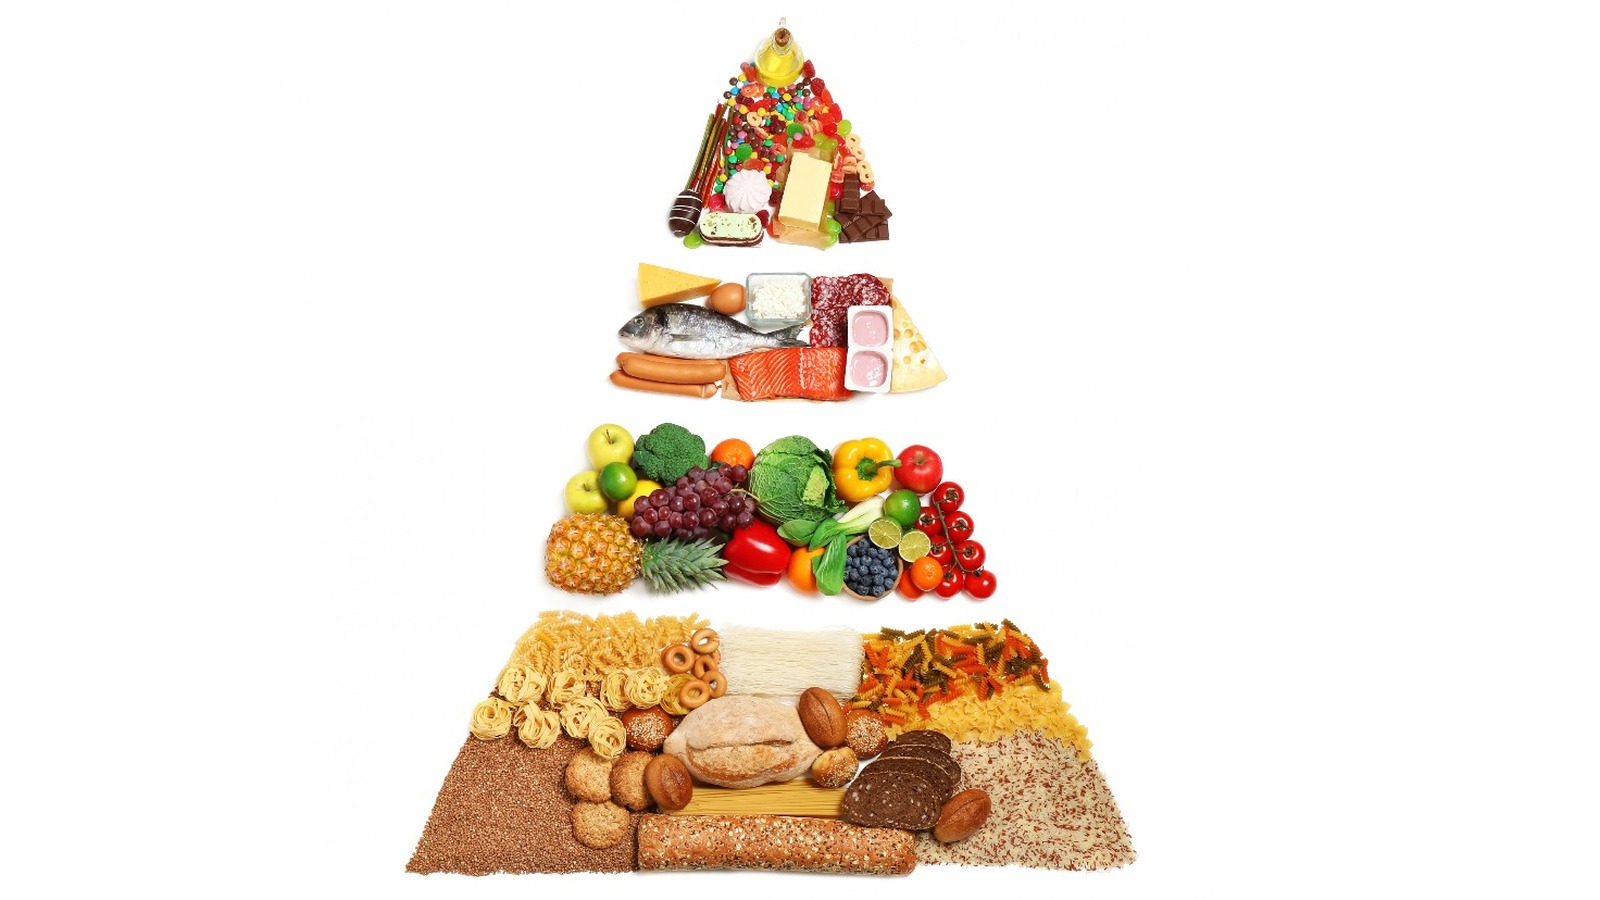 usda food guide pyramid 2022